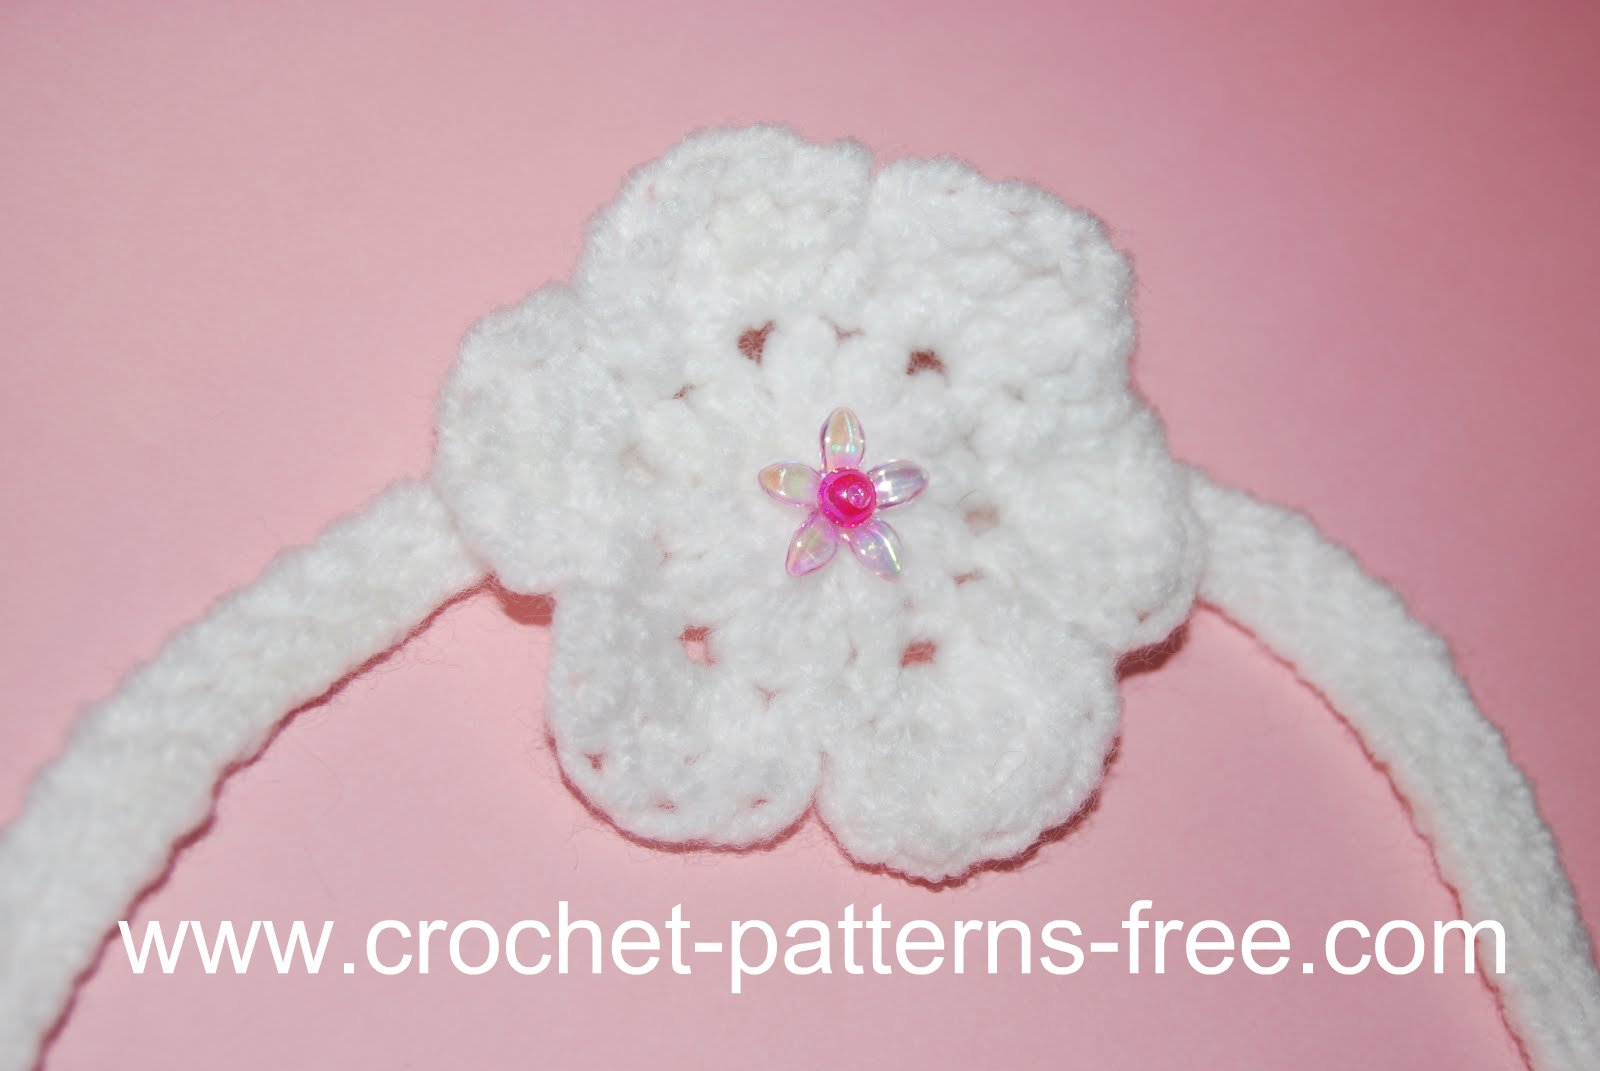 Easy Crochet Baby headband with Flower - Free Pattern